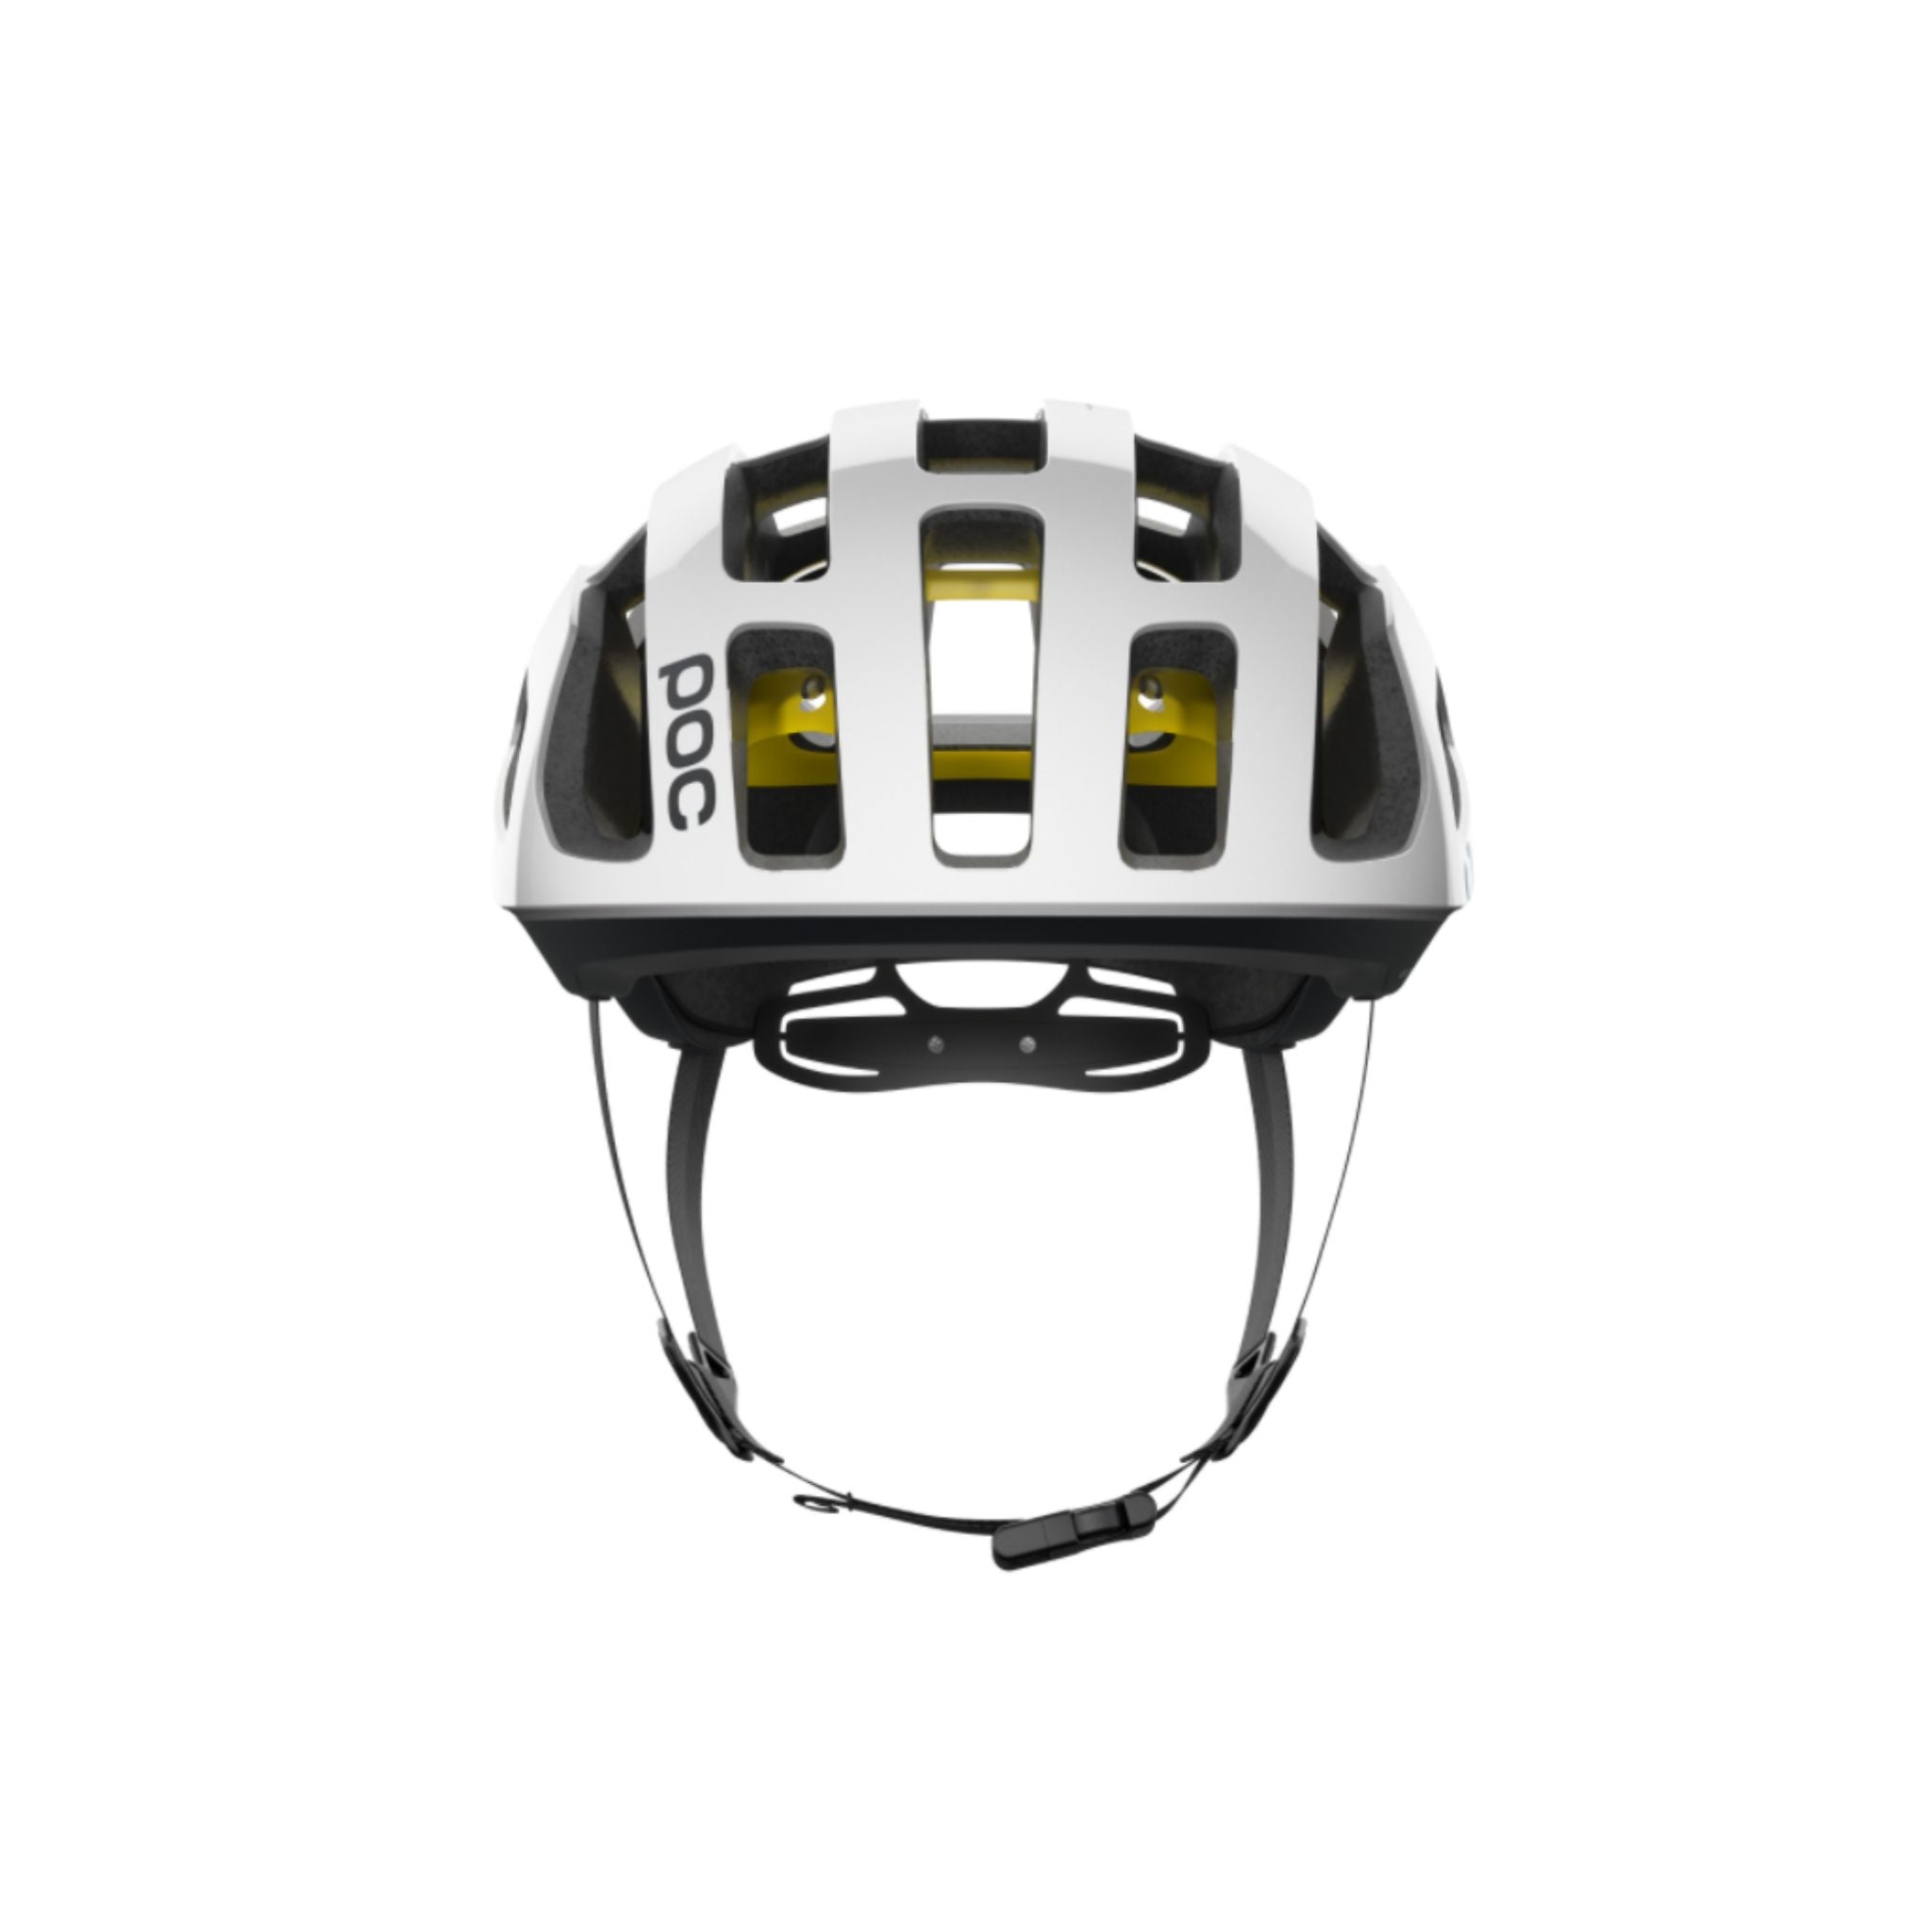 POC Octal X MIPS Helmet